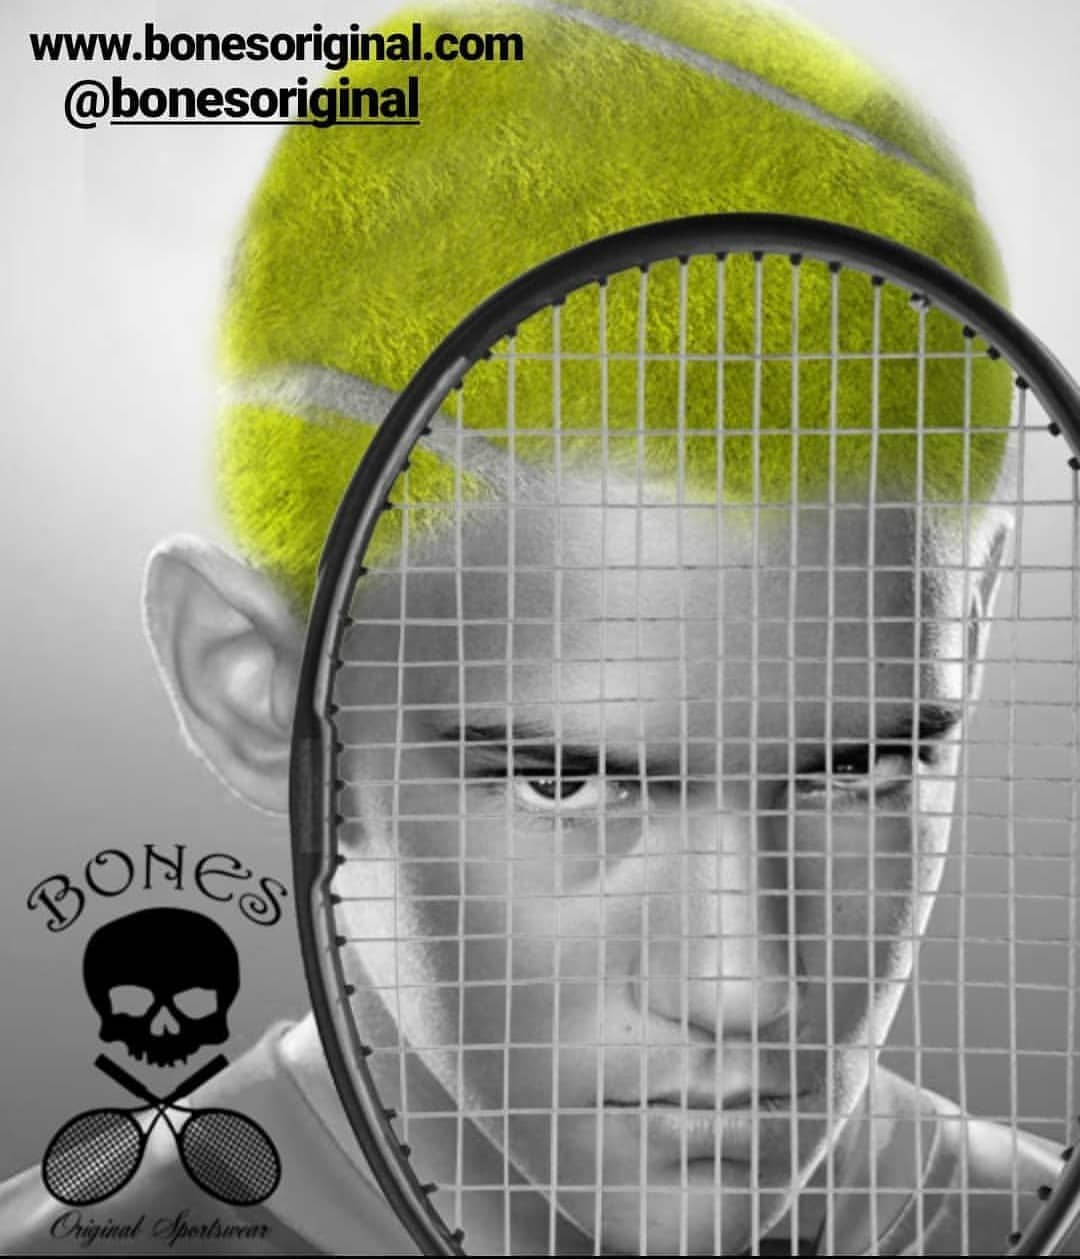 Be Original, Be Bones!
www.bonesoriginal.com
#tennis #tenis #squash #beachtennis #bebones #tennislover #sportswear #roupaesportiva